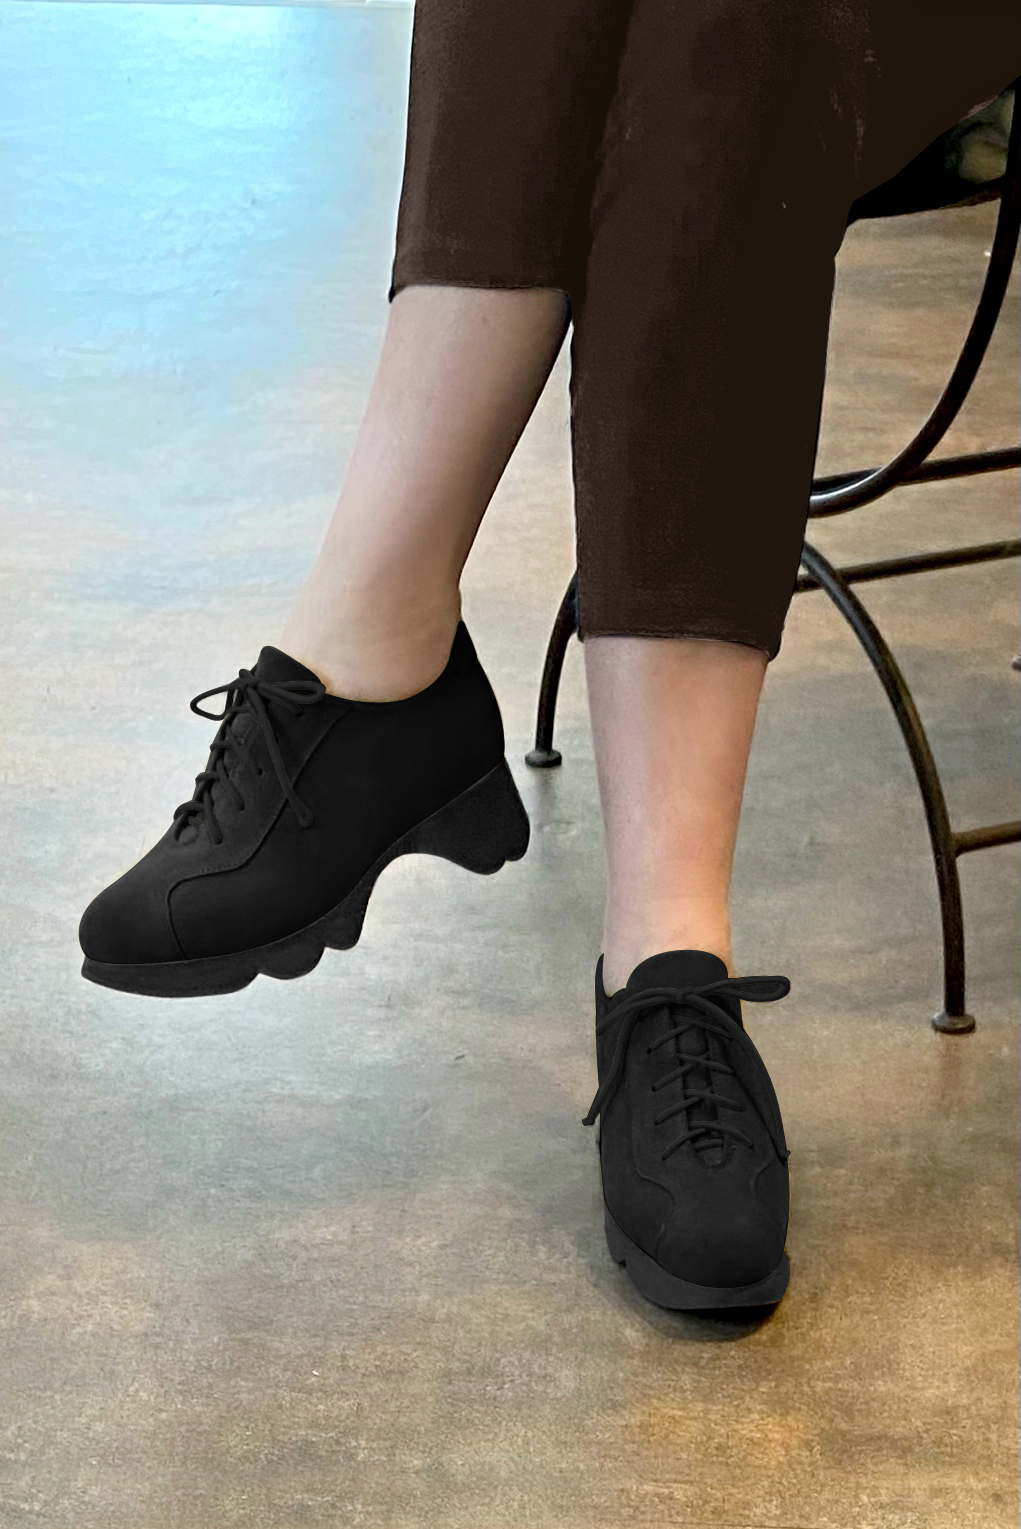 Matt black women's casual lace-up shoes.. Worn view - Florence KOOIJMAN